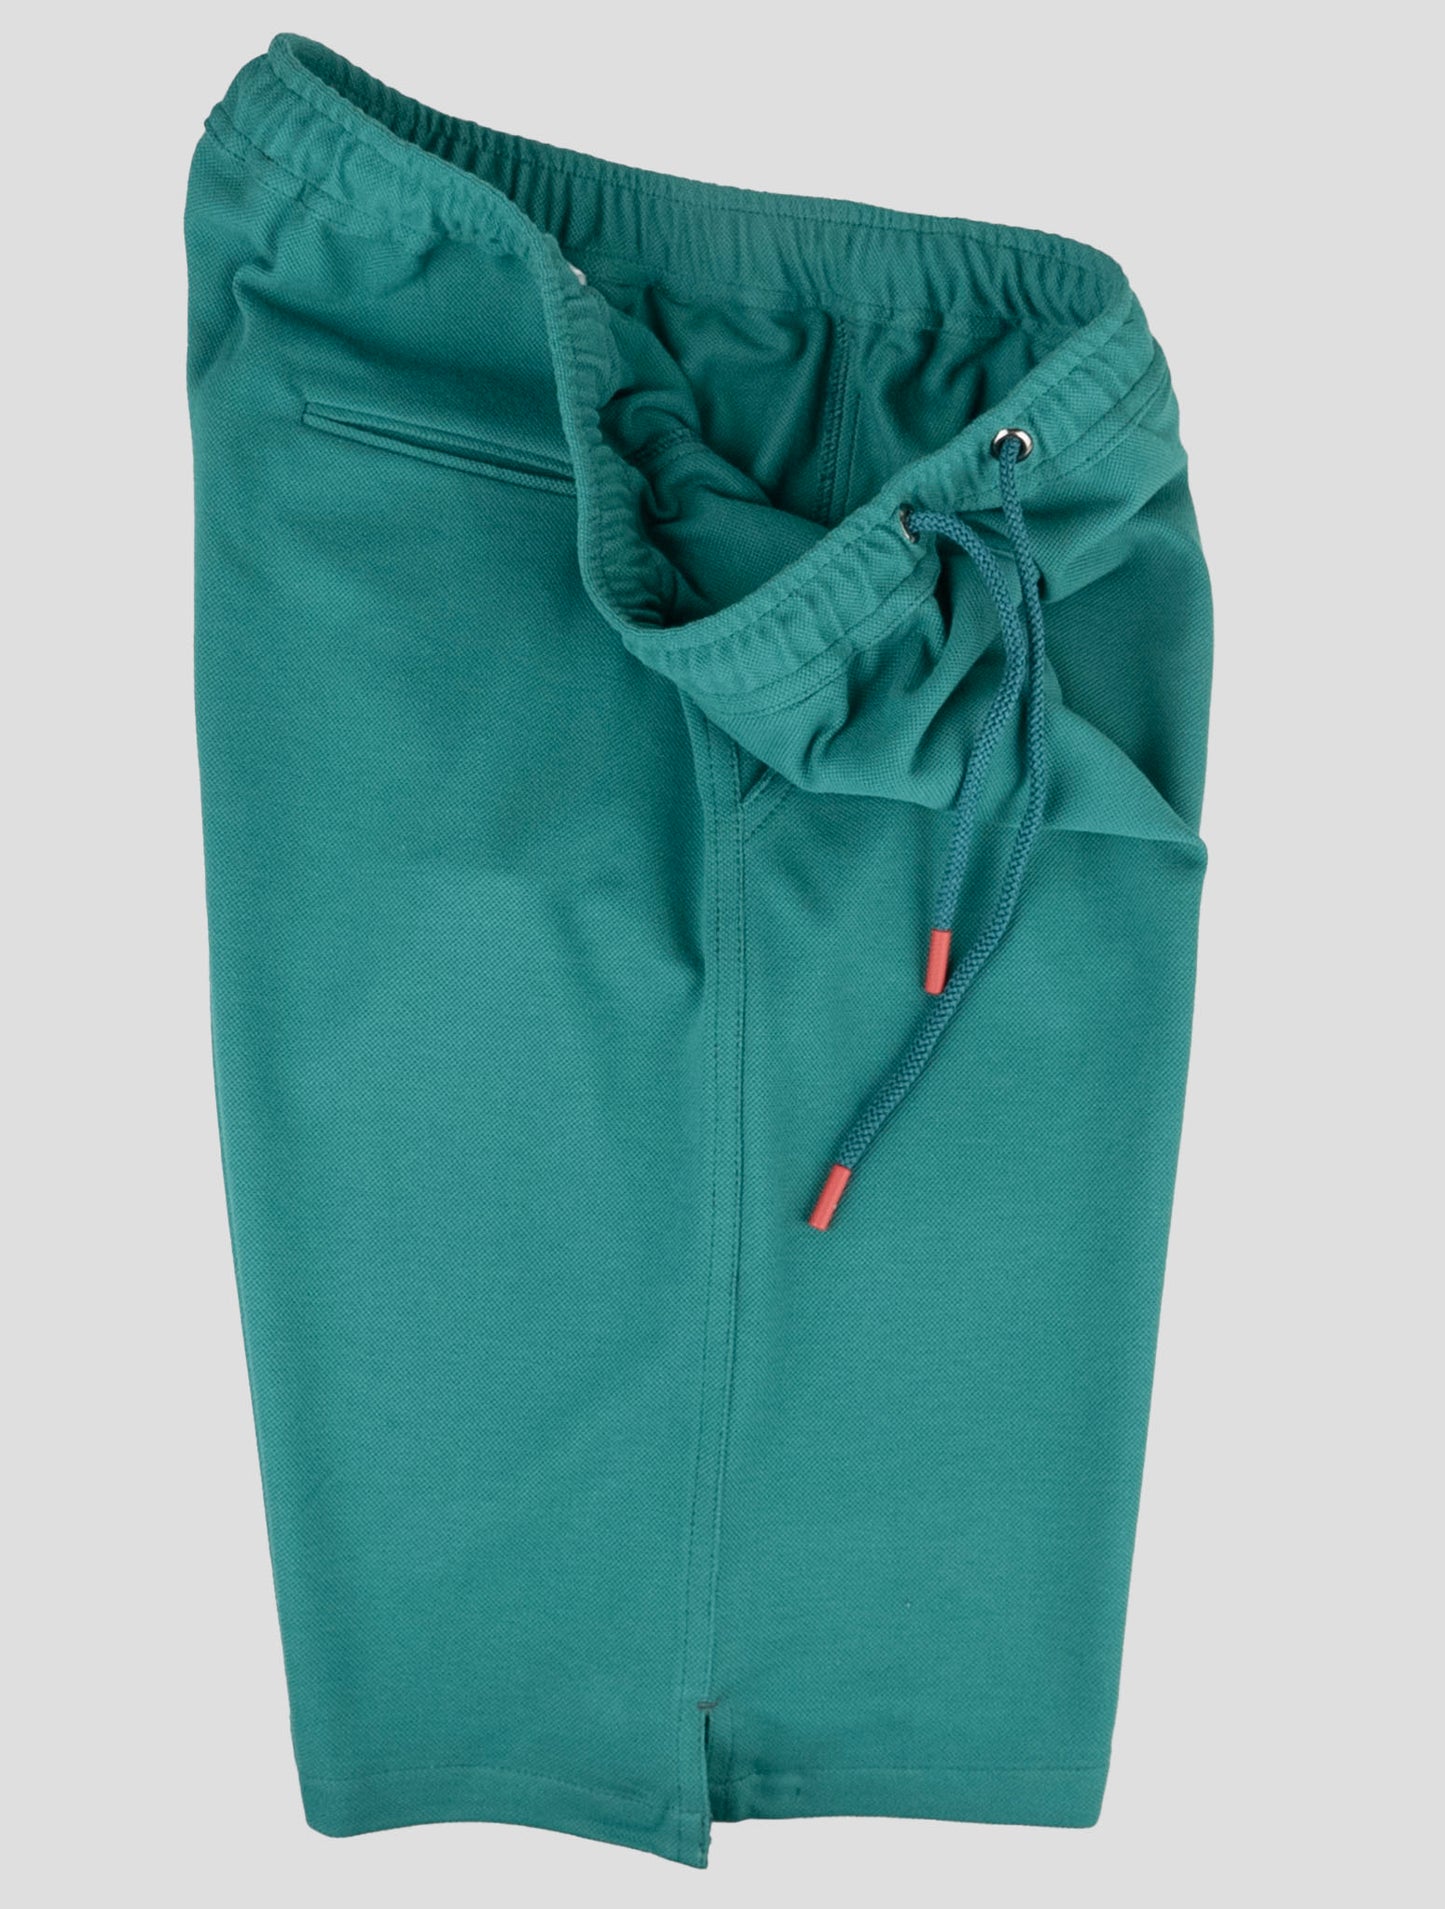 Kiton matching outfit-gray mariano and green short pants tracksuit